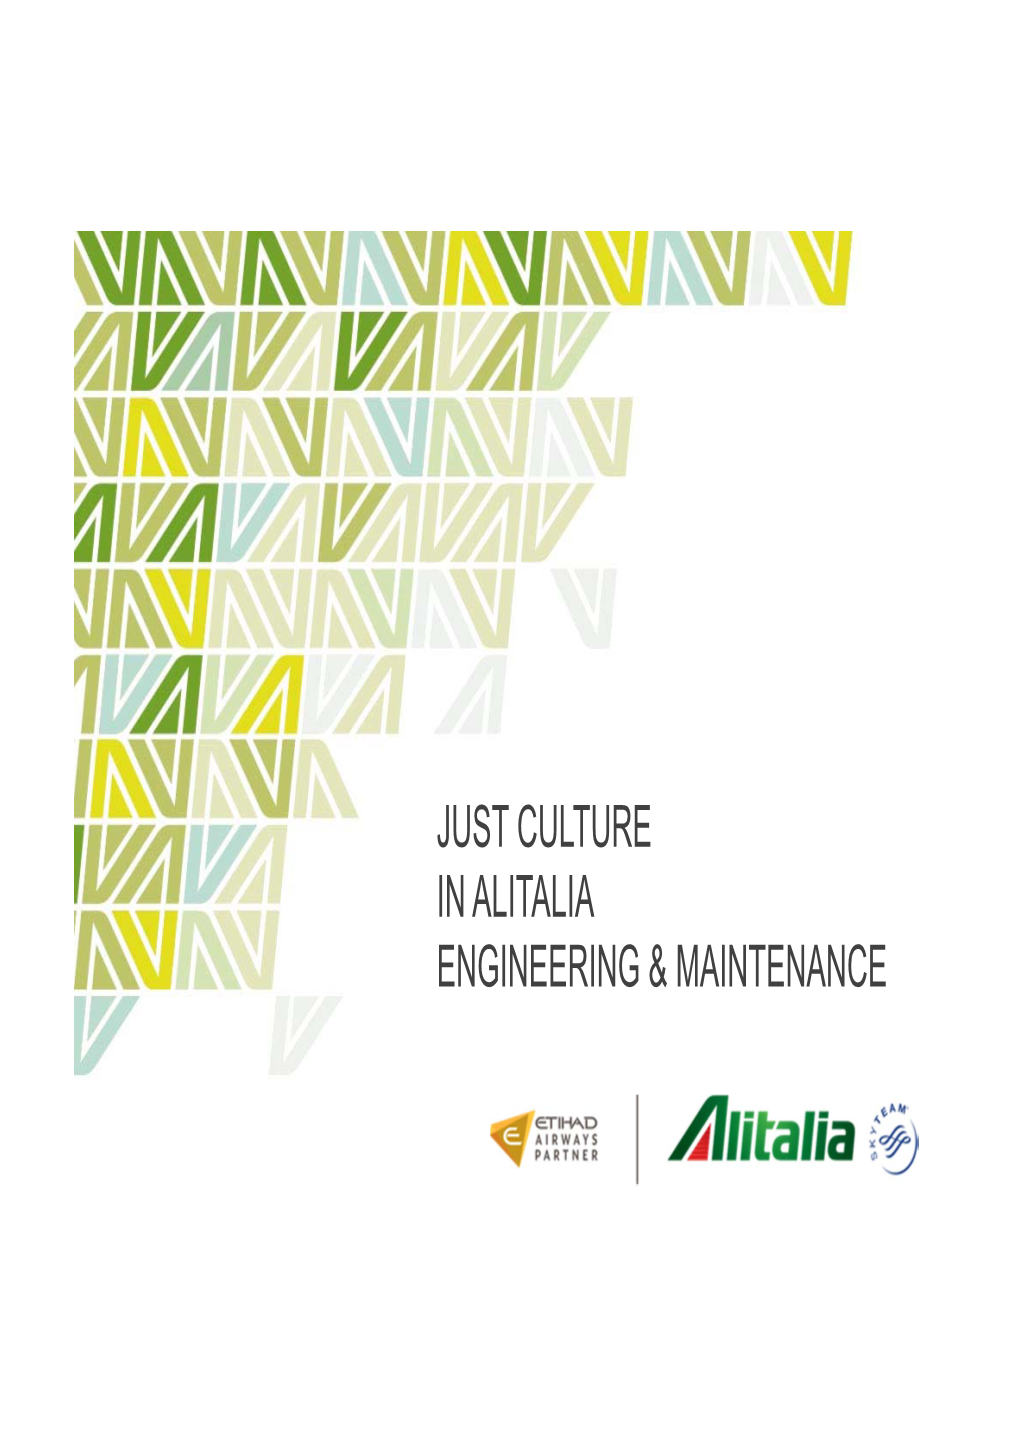 Just Culture in Alitalia Engineering & Maintenance